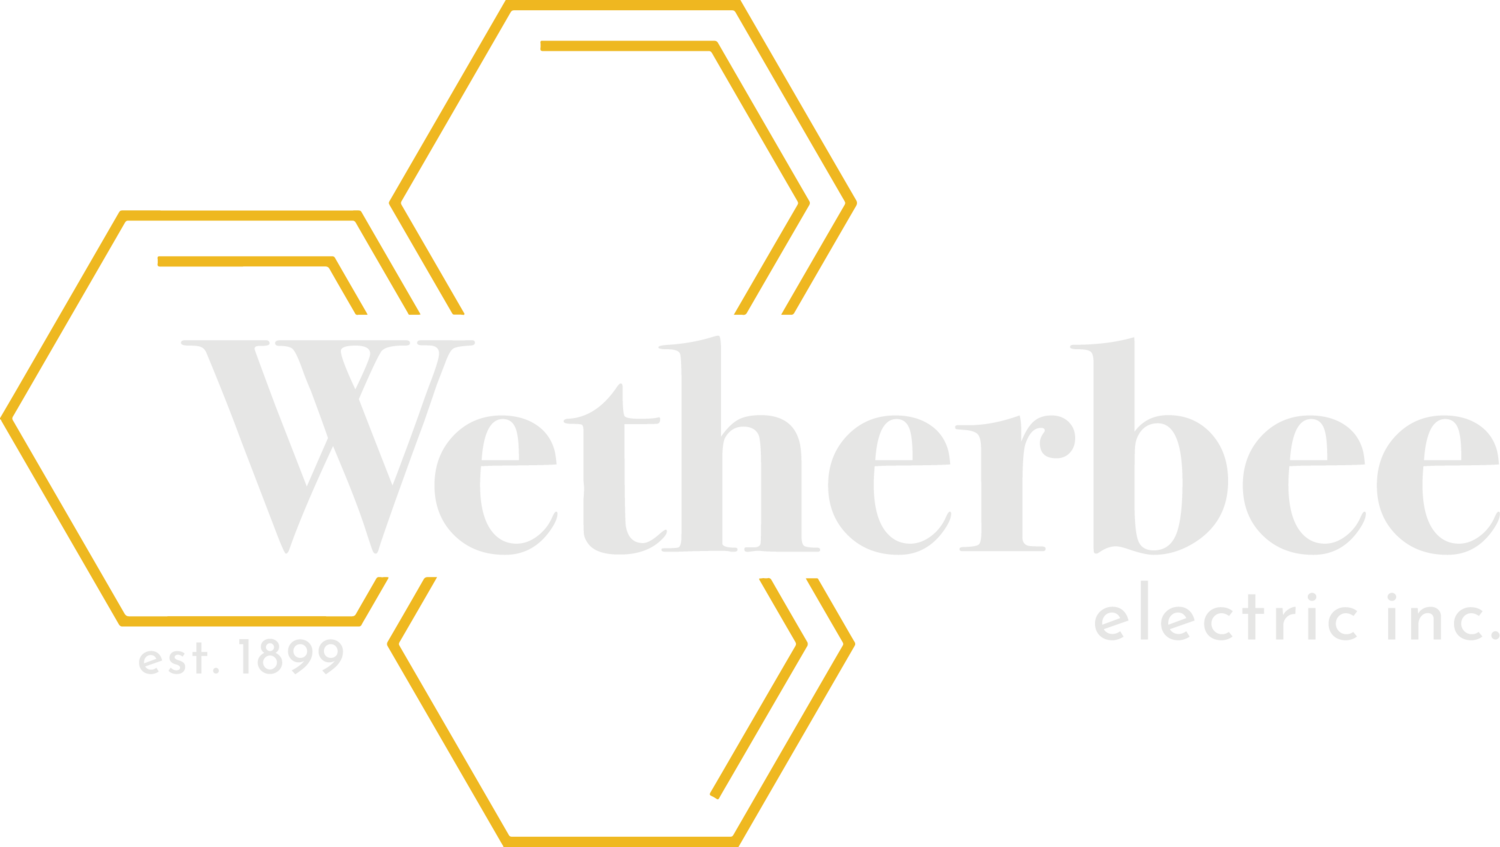 Wetherbee Electric